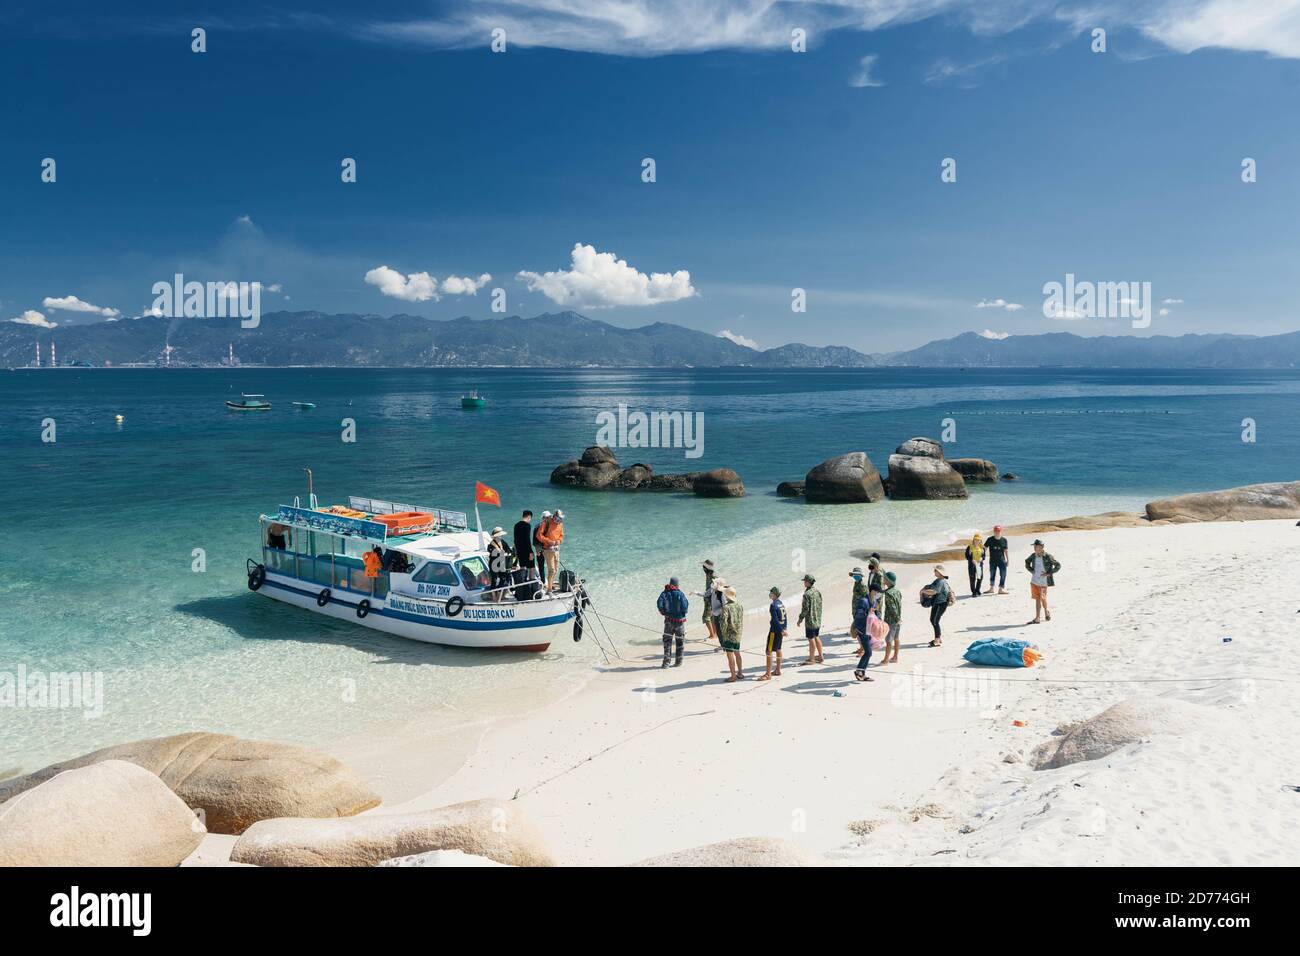 BINH THUAN, VIETNAM - 13. September 2020: Ein Tag auf der Insel Cu Lao CAU - Tuy Phong Binh Thuan Vietnam Stockfoto